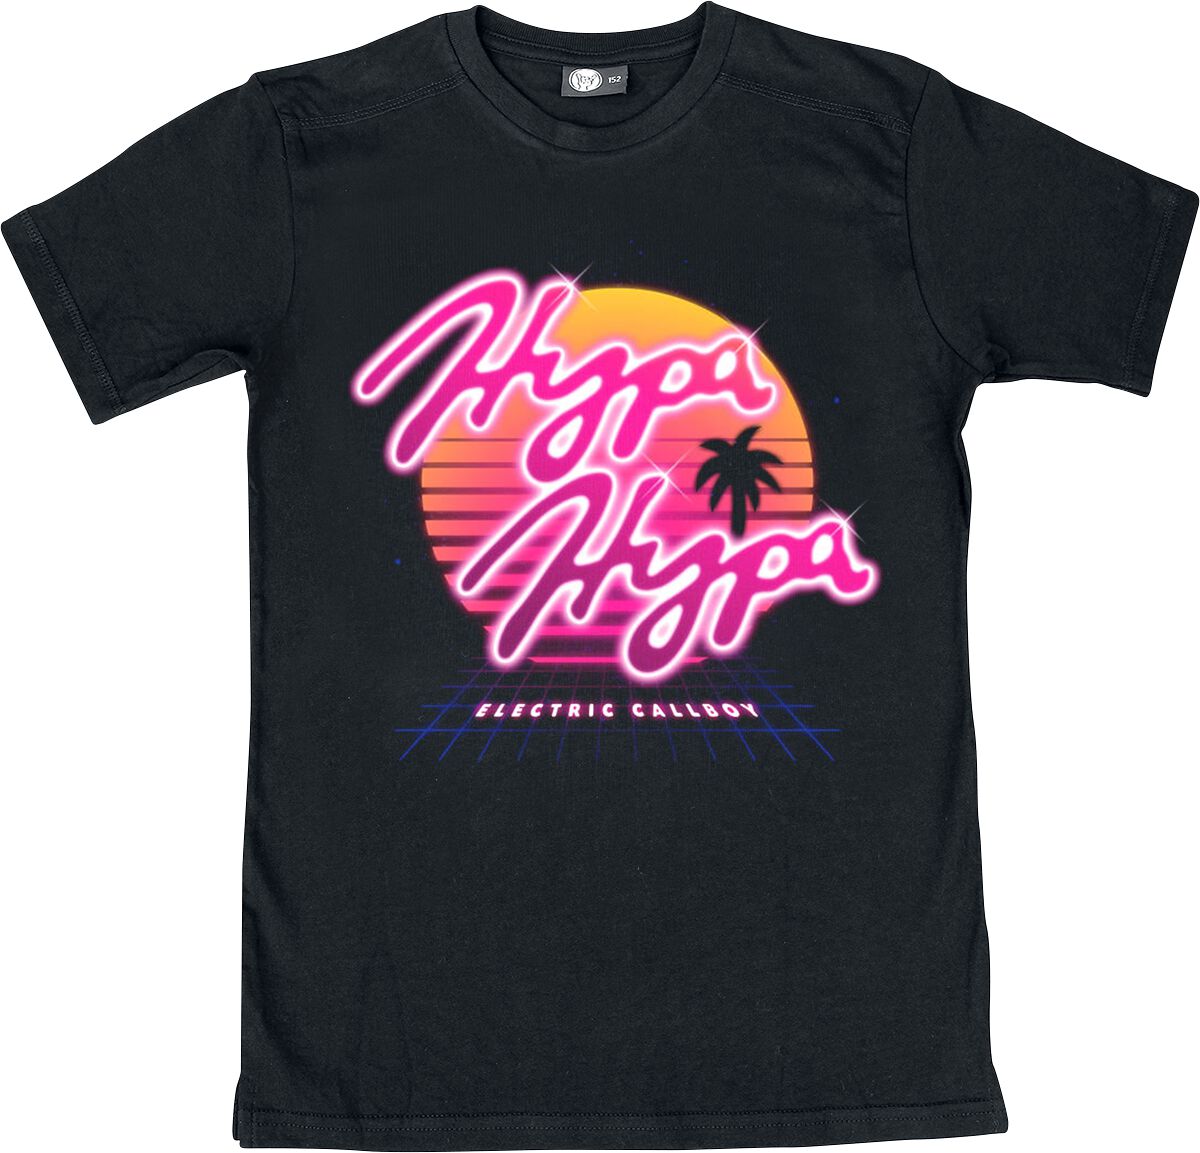 Electric Callboy Metal Kids - Hypa Hypa T-Shirt schwarz in 116